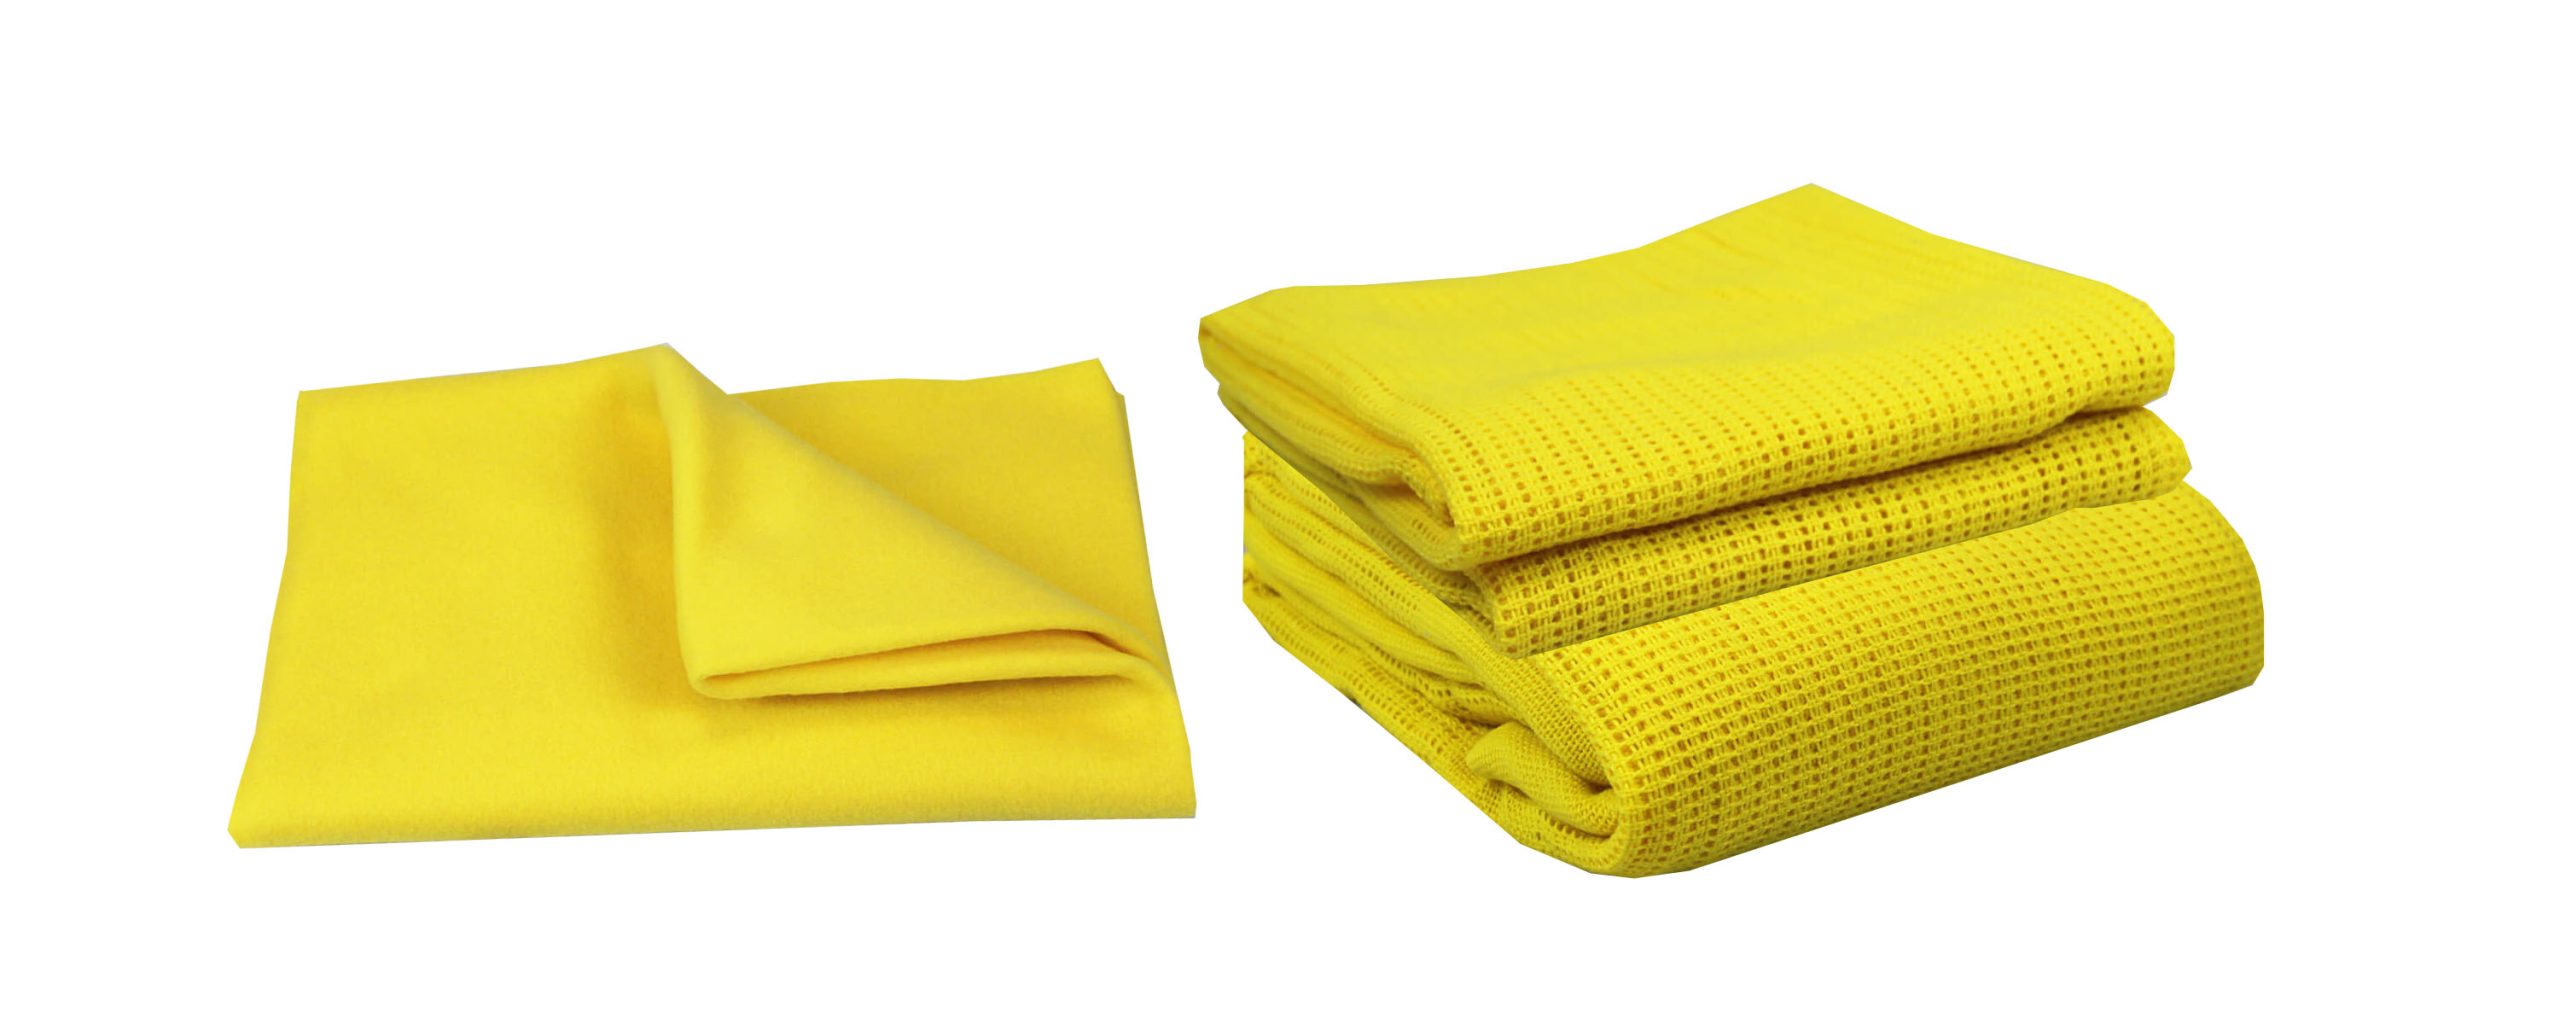 Falls risk yellow blankets